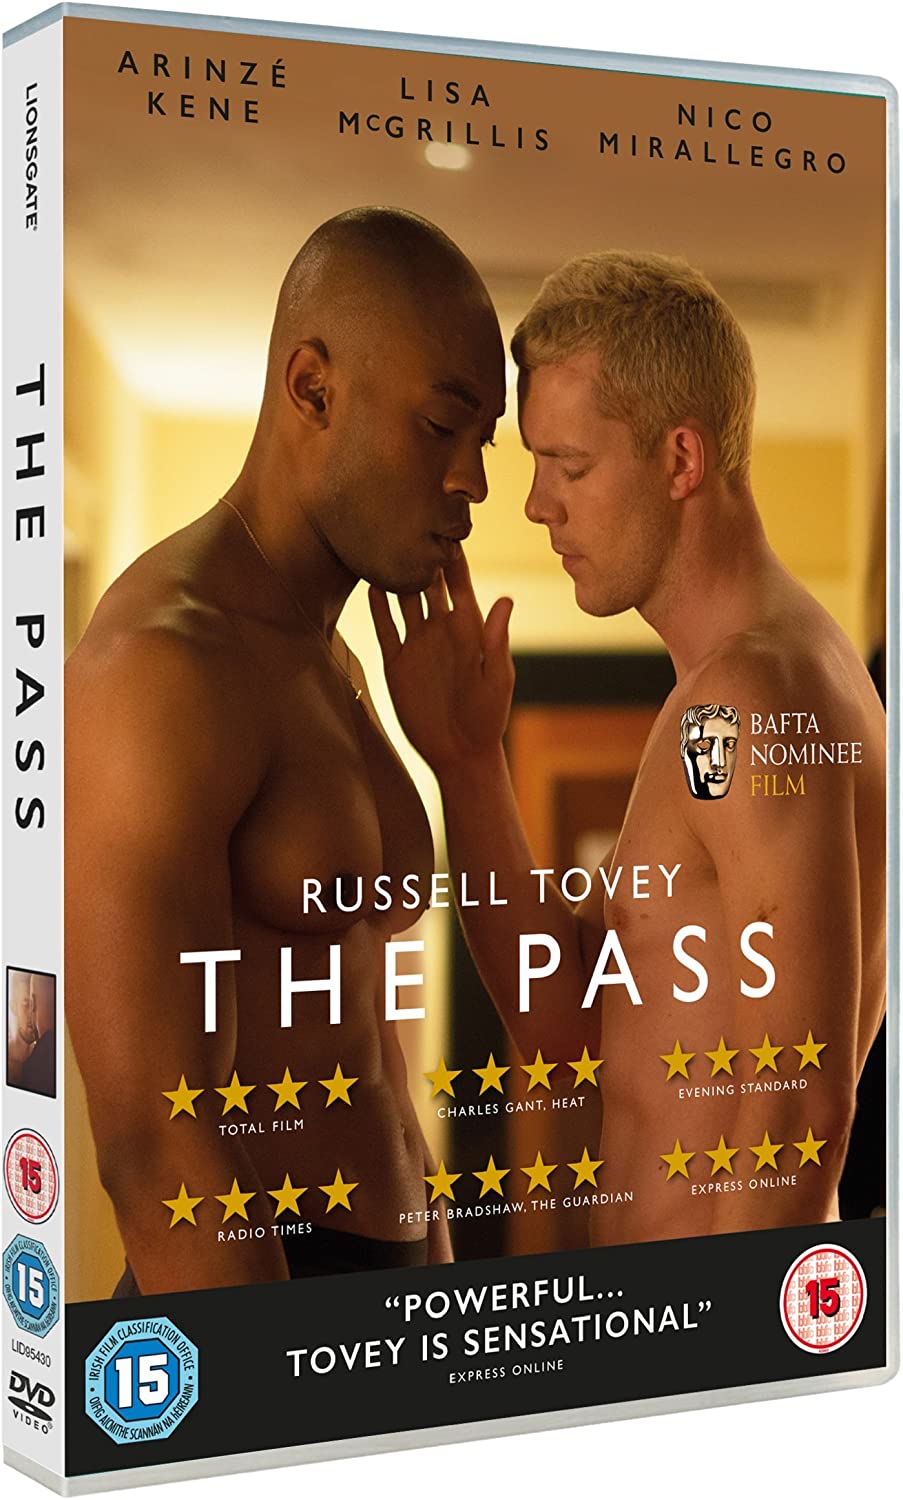 The Pass - Drama [DVD]